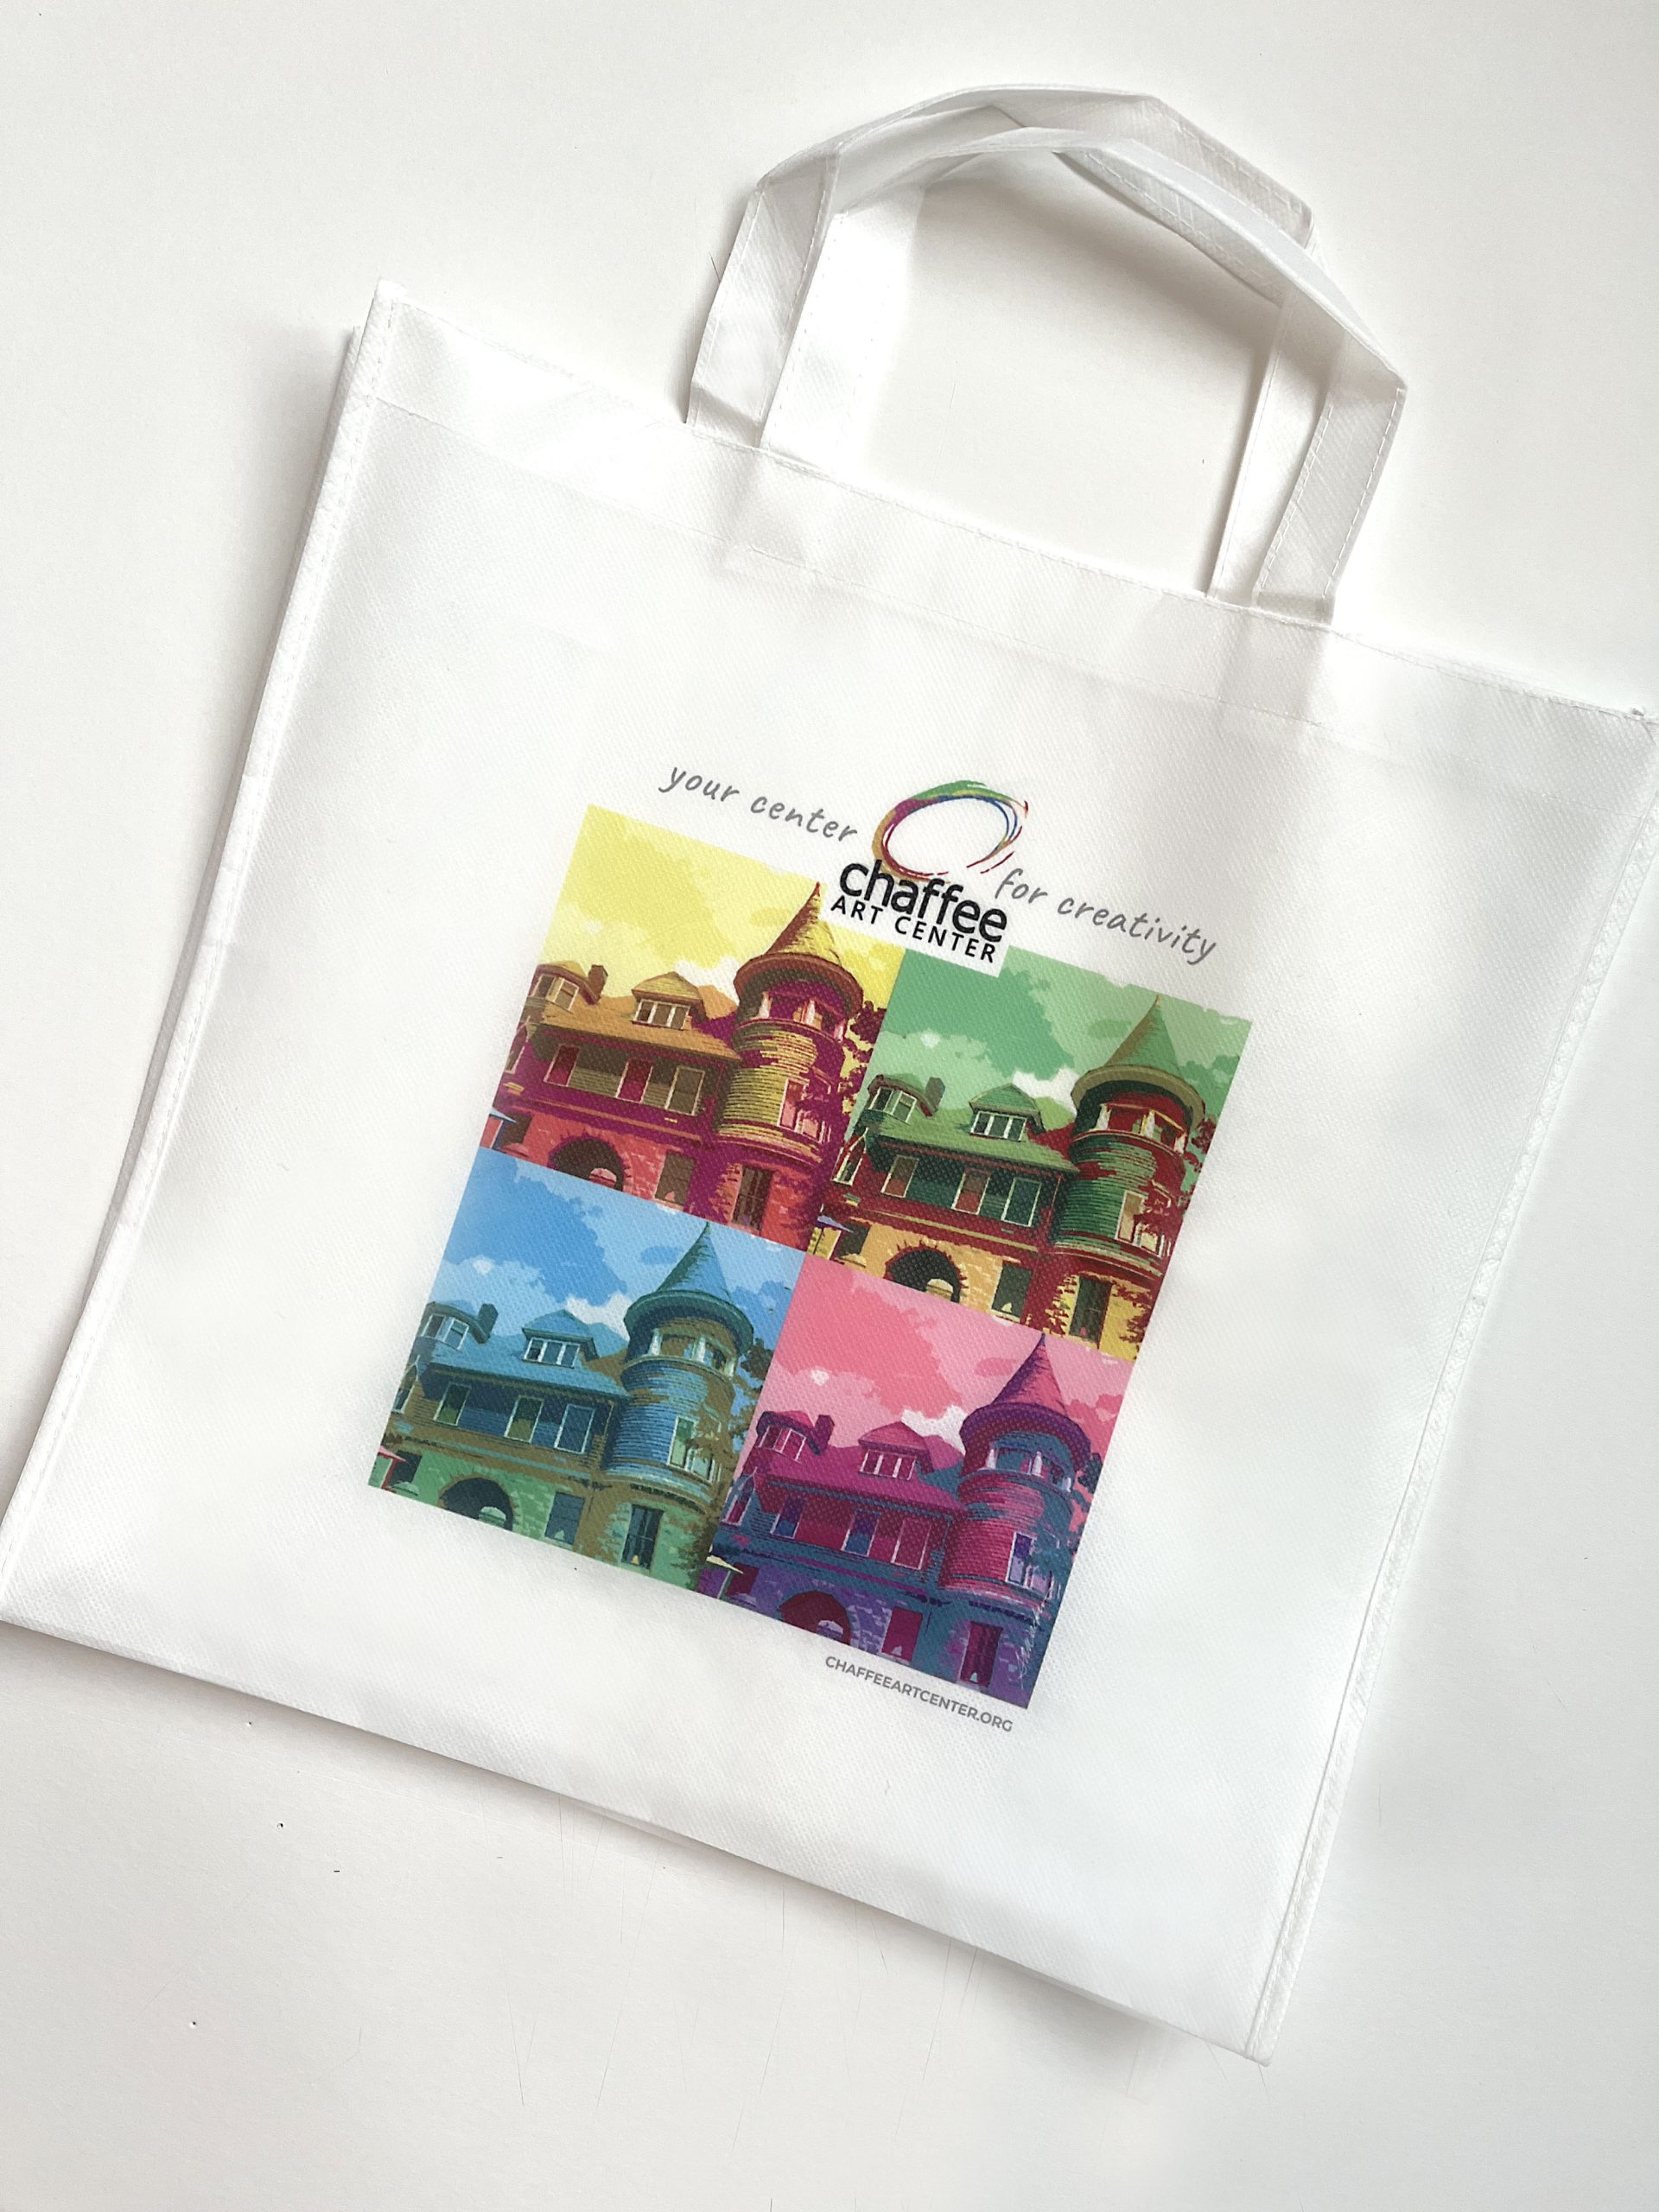 “Limited Edition” Chaffee Art Center bag